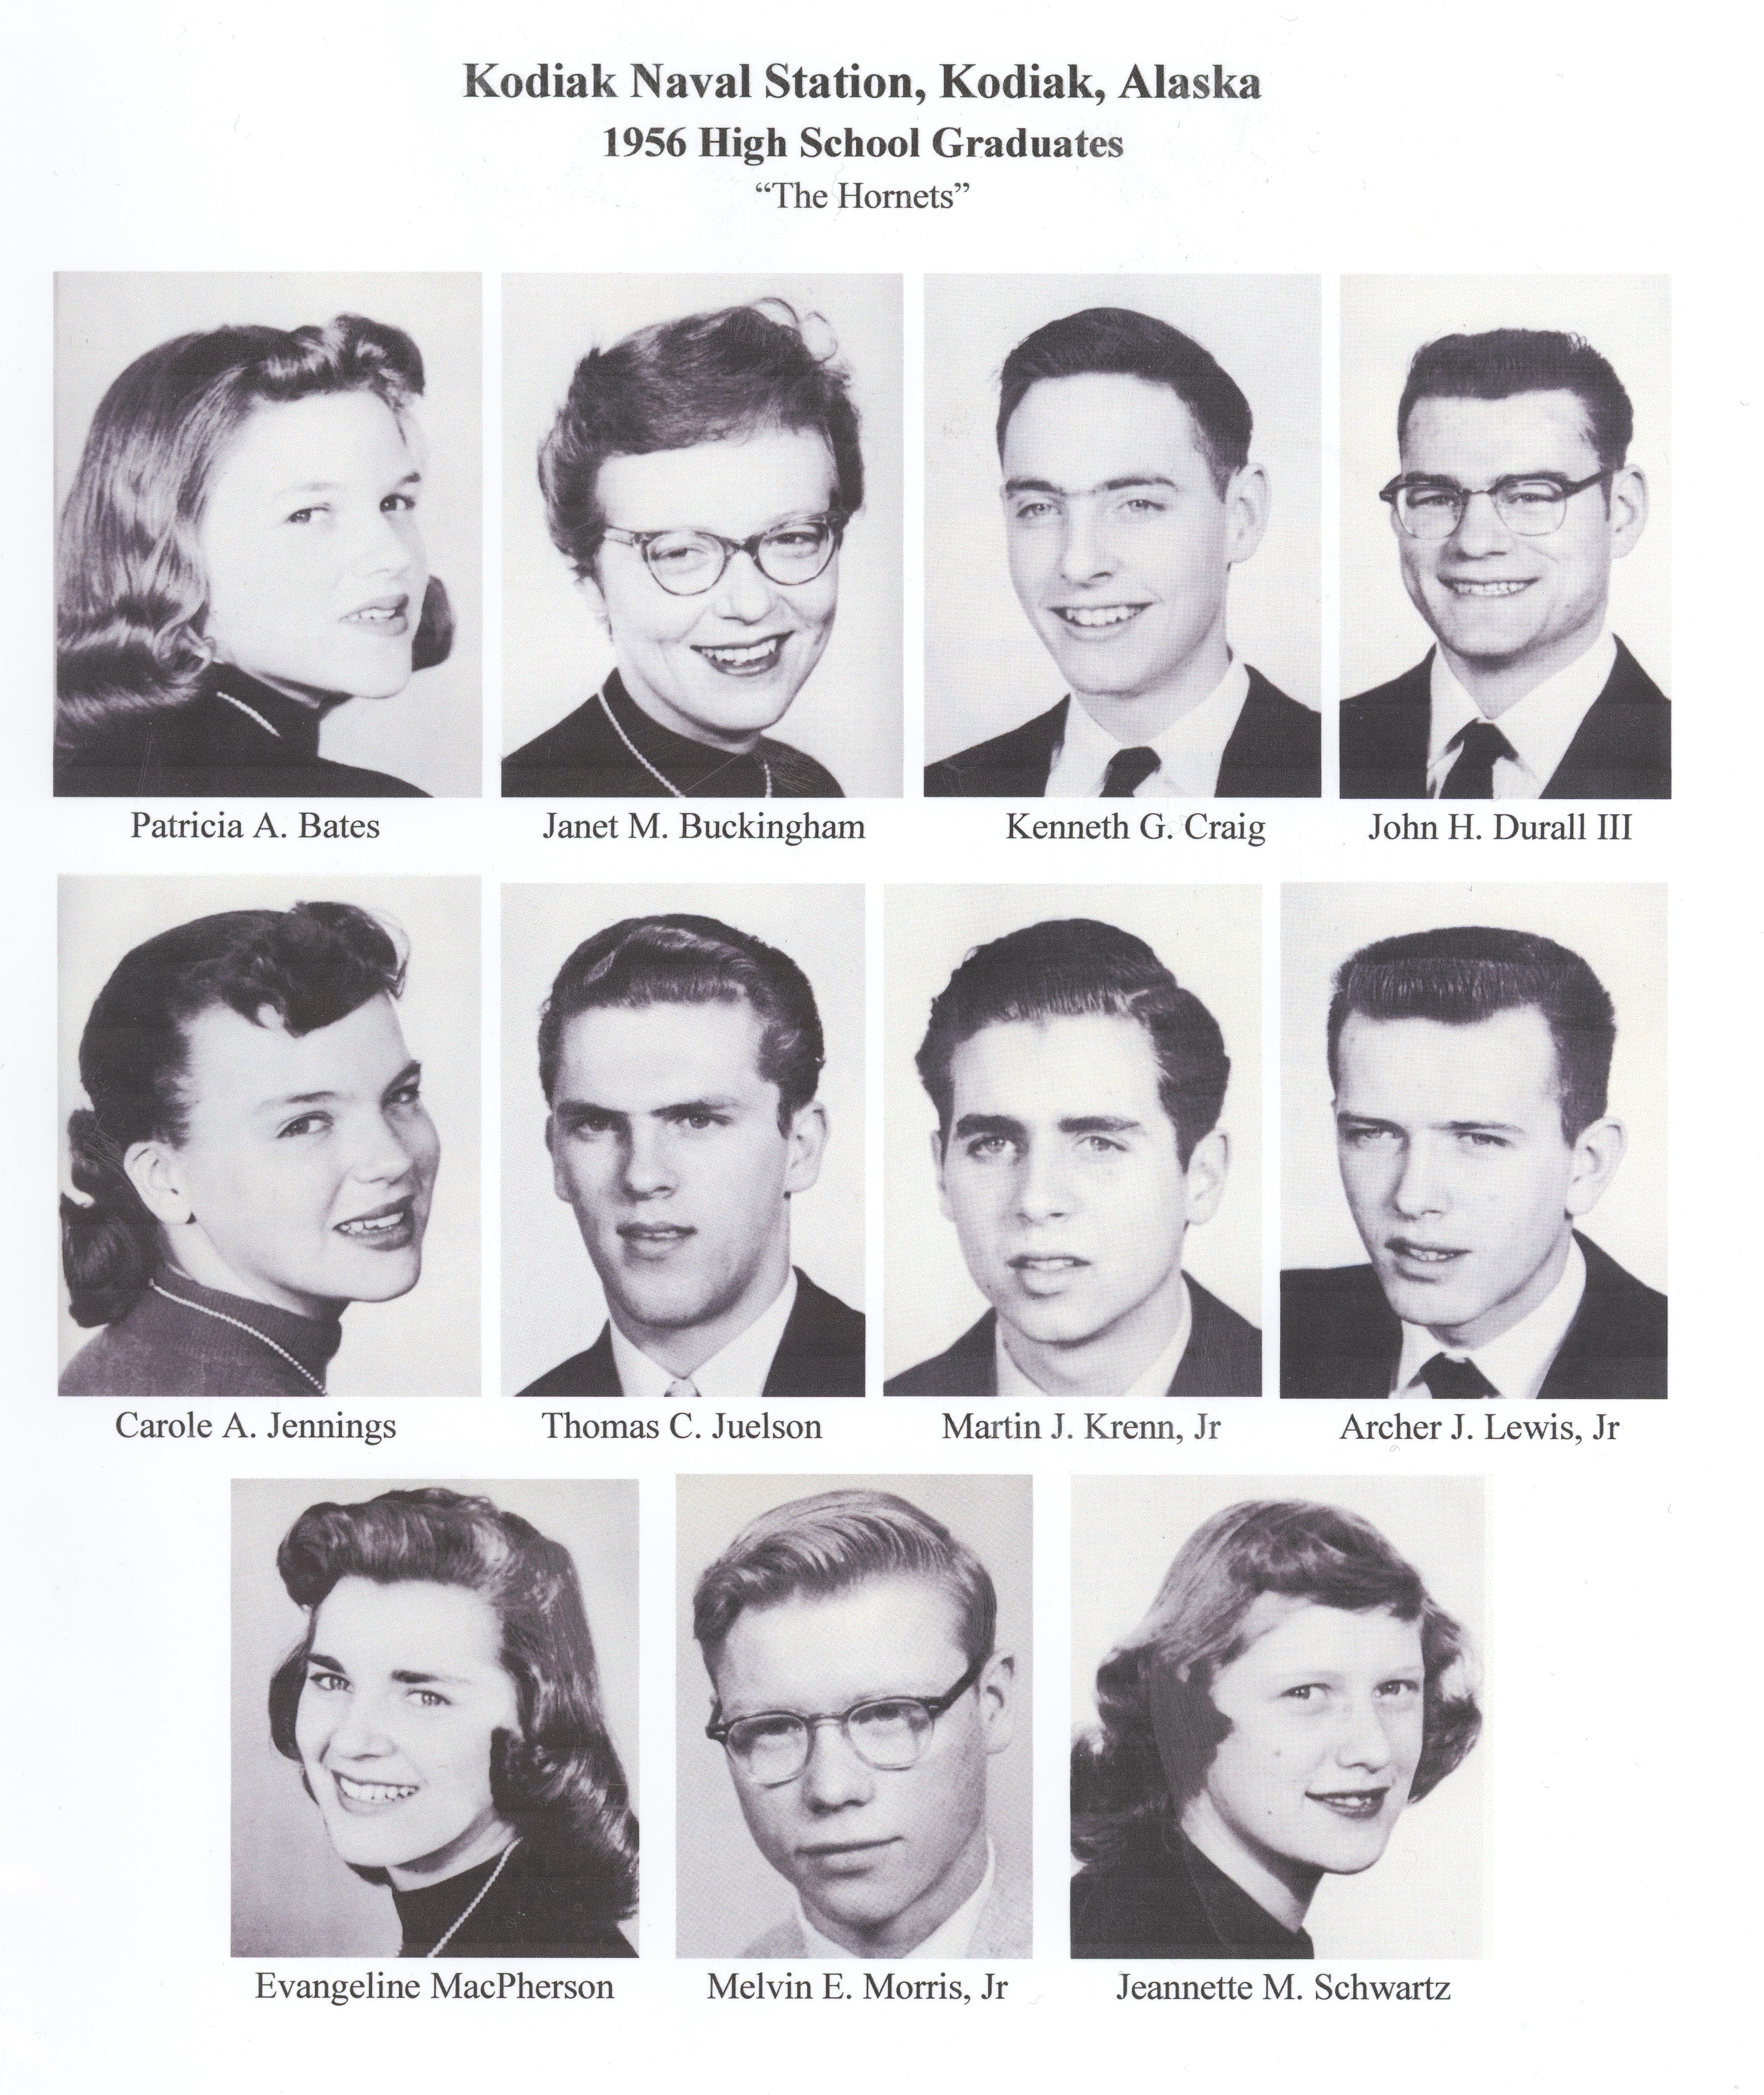 1956 Kodiak Naval Station High School